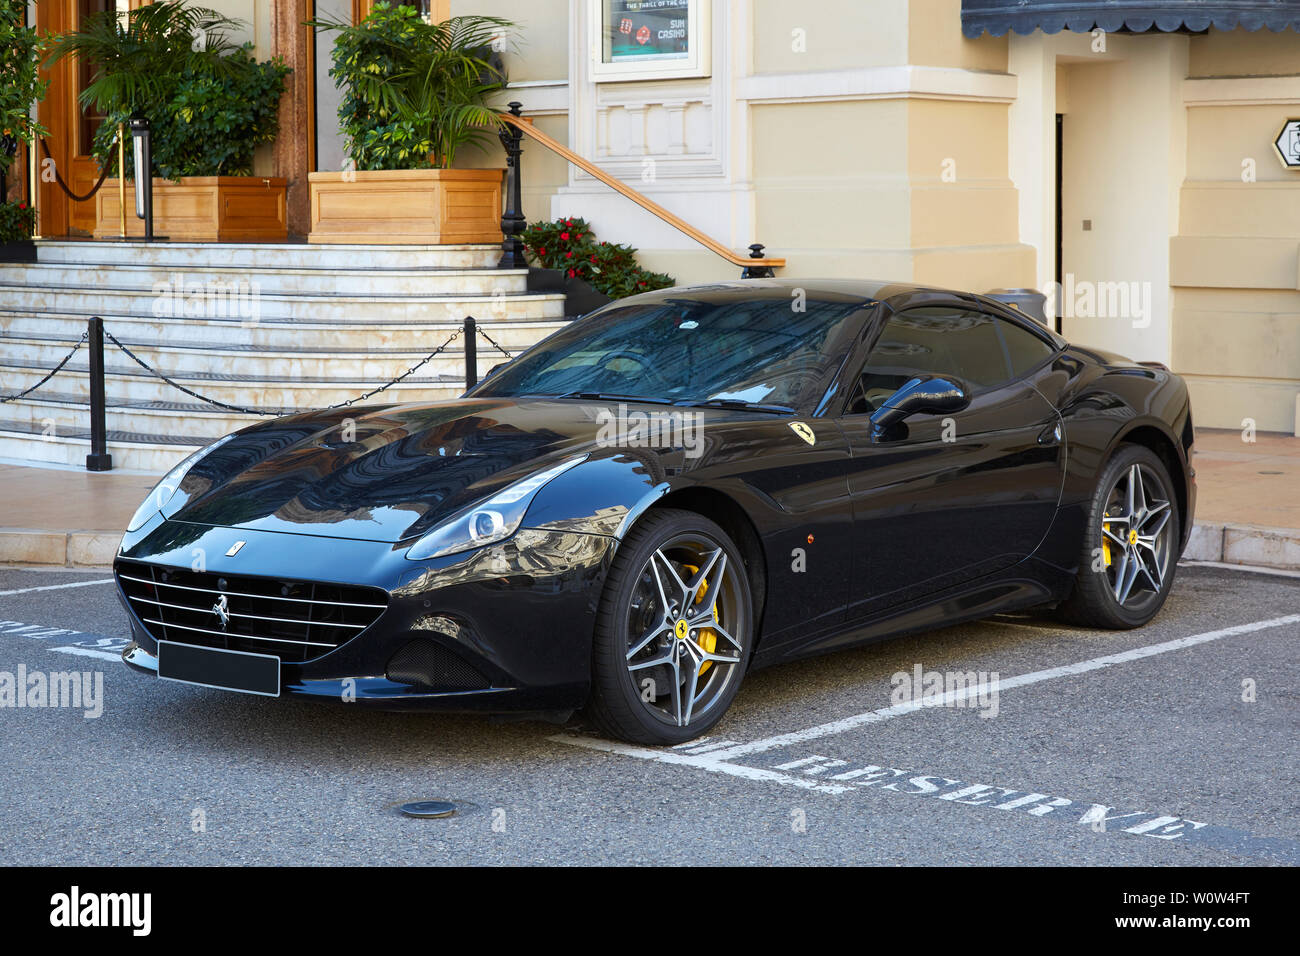 Ferrari california hi-res stock photography and images - Alamy